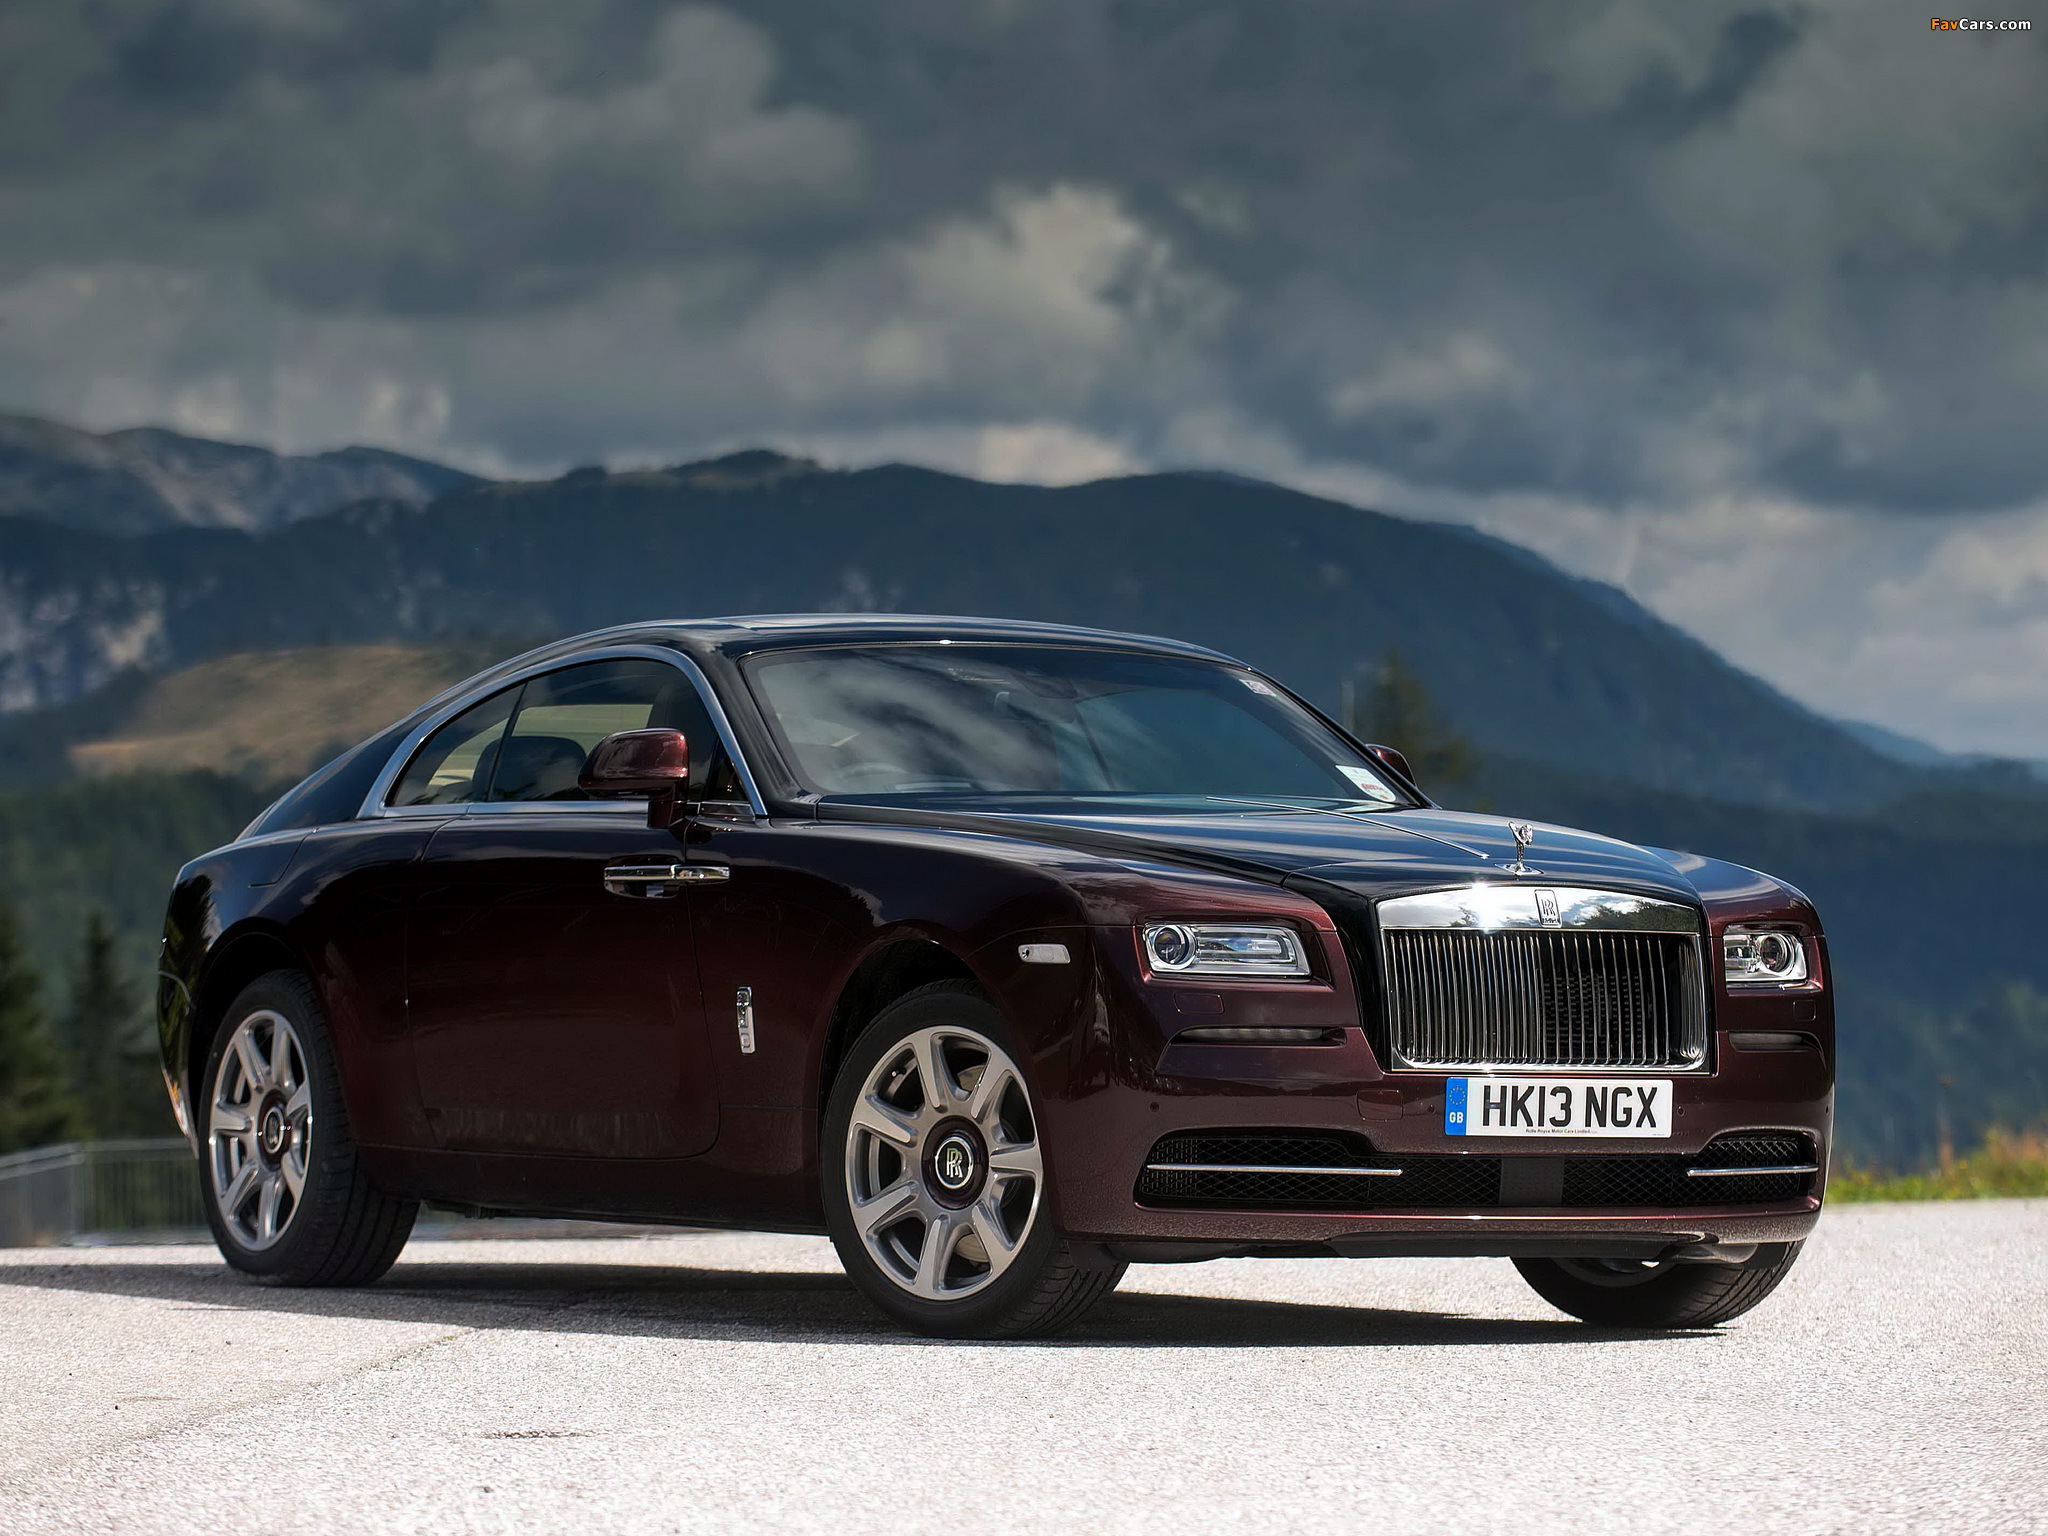 Роллс врайт. Rolls Royce 2013. Rolls-Royce Wraith 2013 года. Машина Rolls Royce Wraith. Rolls Royce Wraith Wraith 2013.